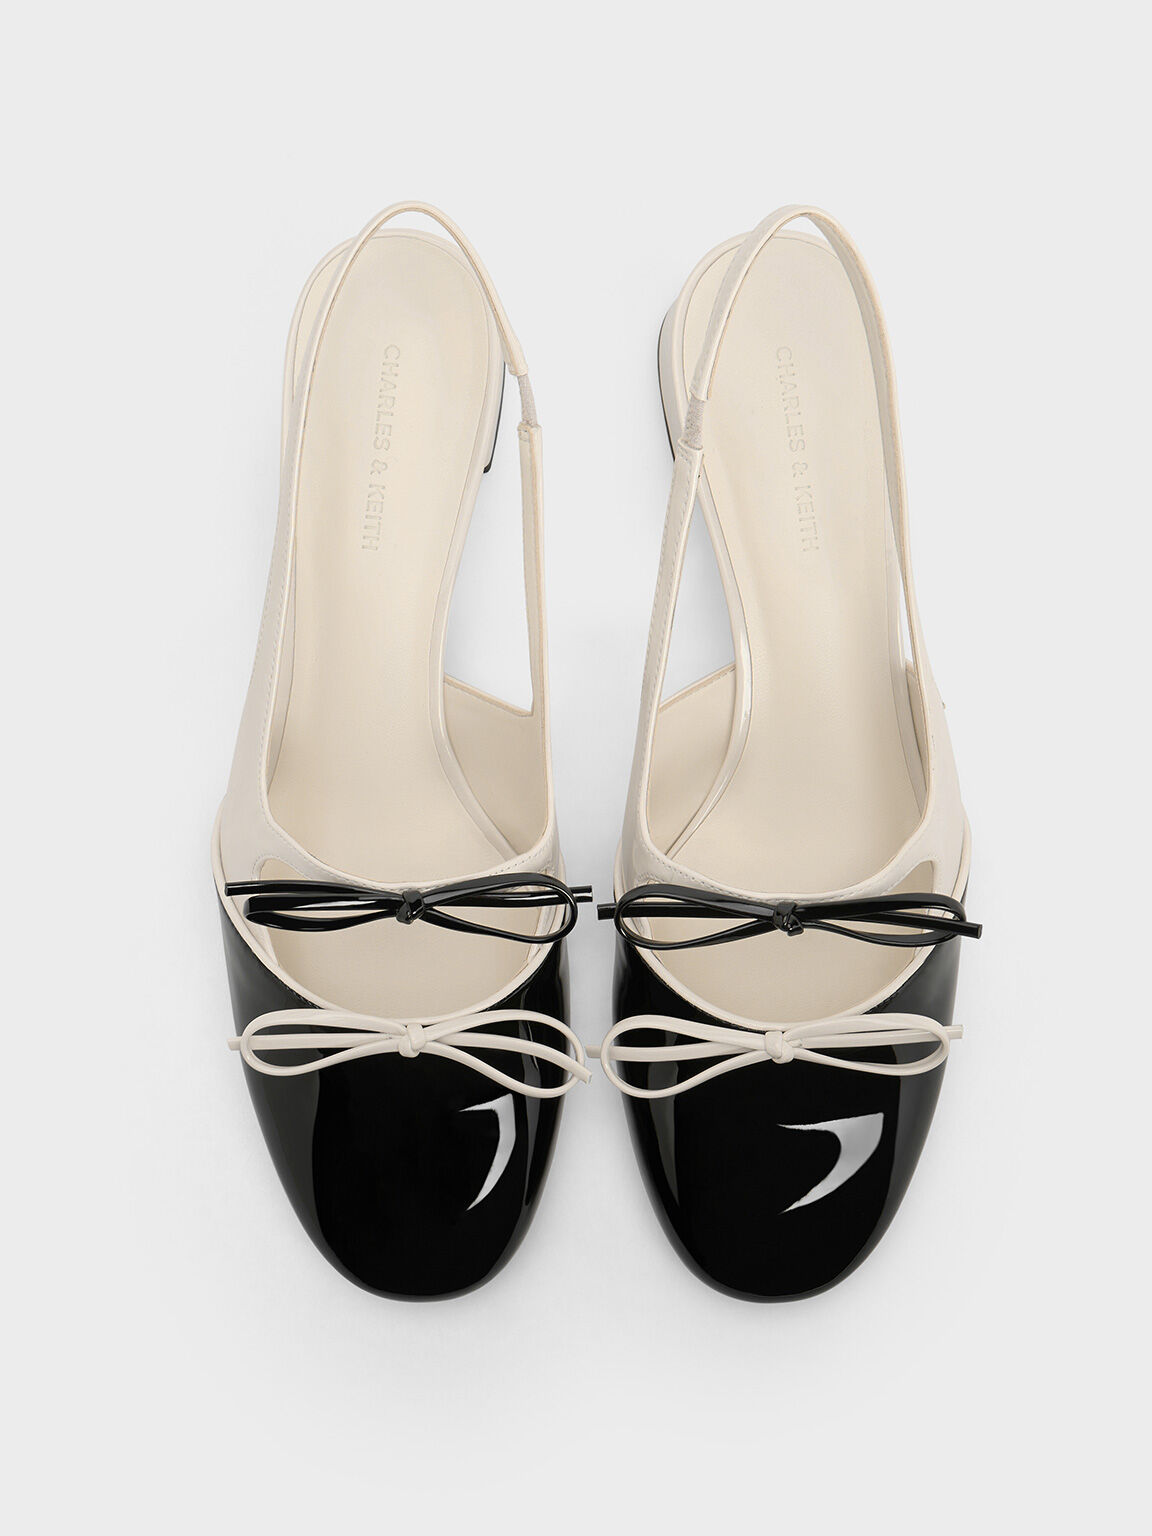 Zapatos de tacón Dorri destalonados en tos tonos con doble lazo, Blanco tiza, hi-res